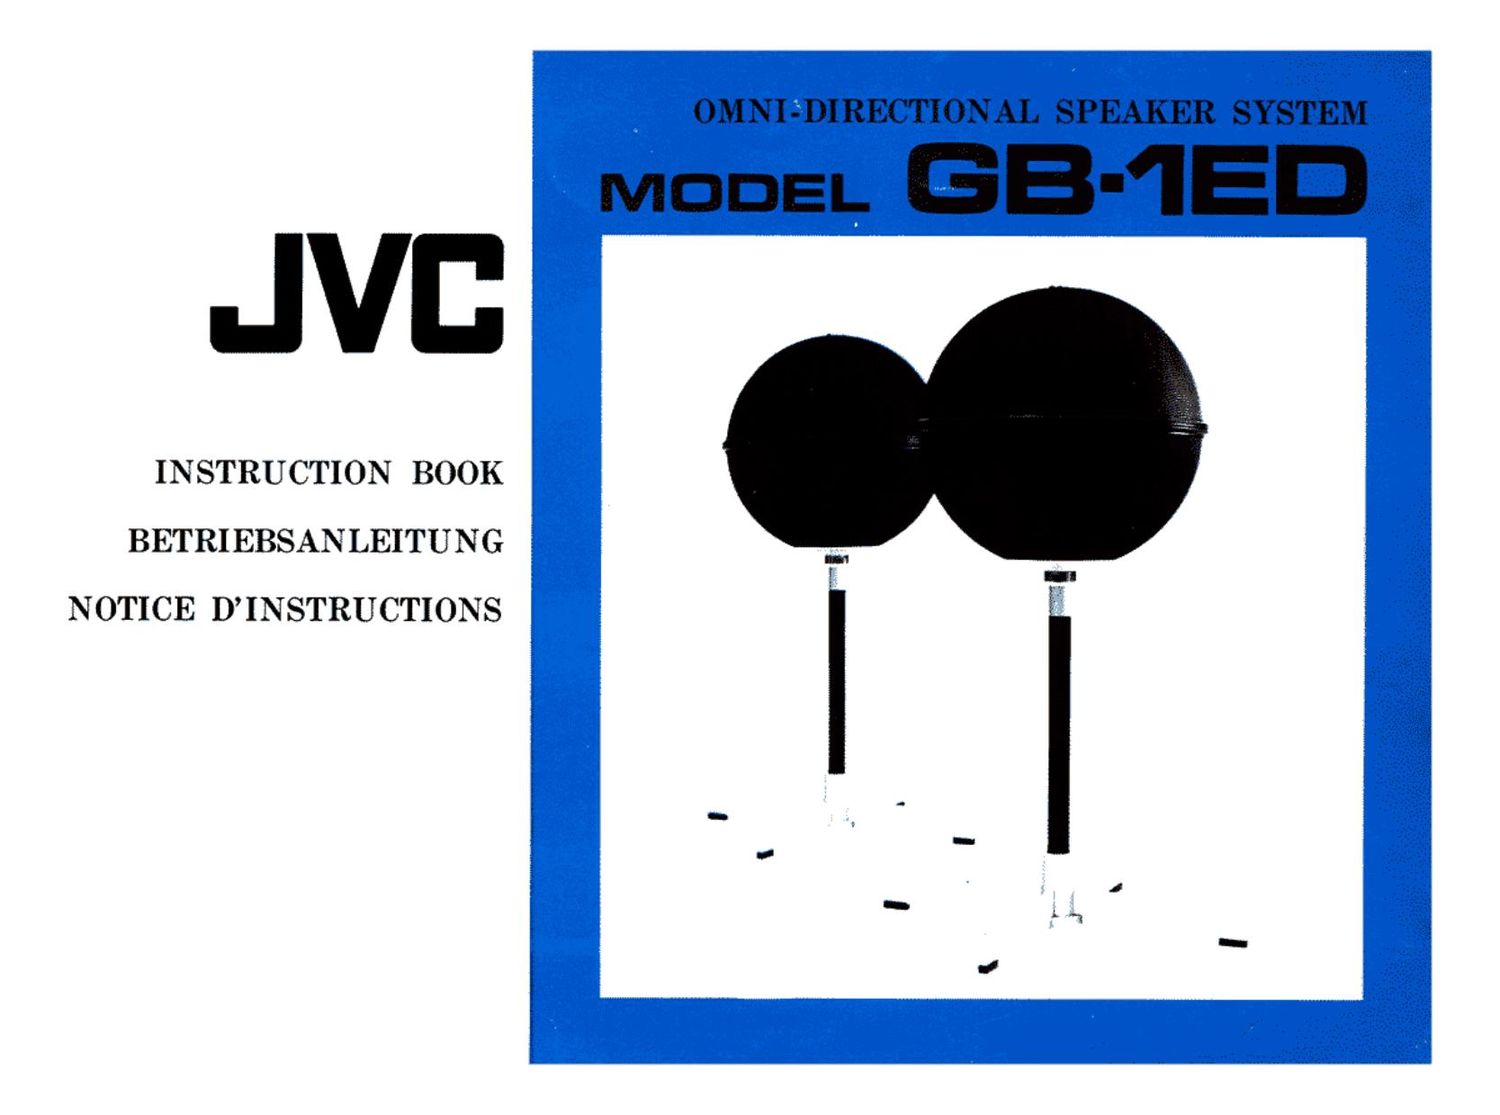 Jvc GB 1 ED Owners Manual